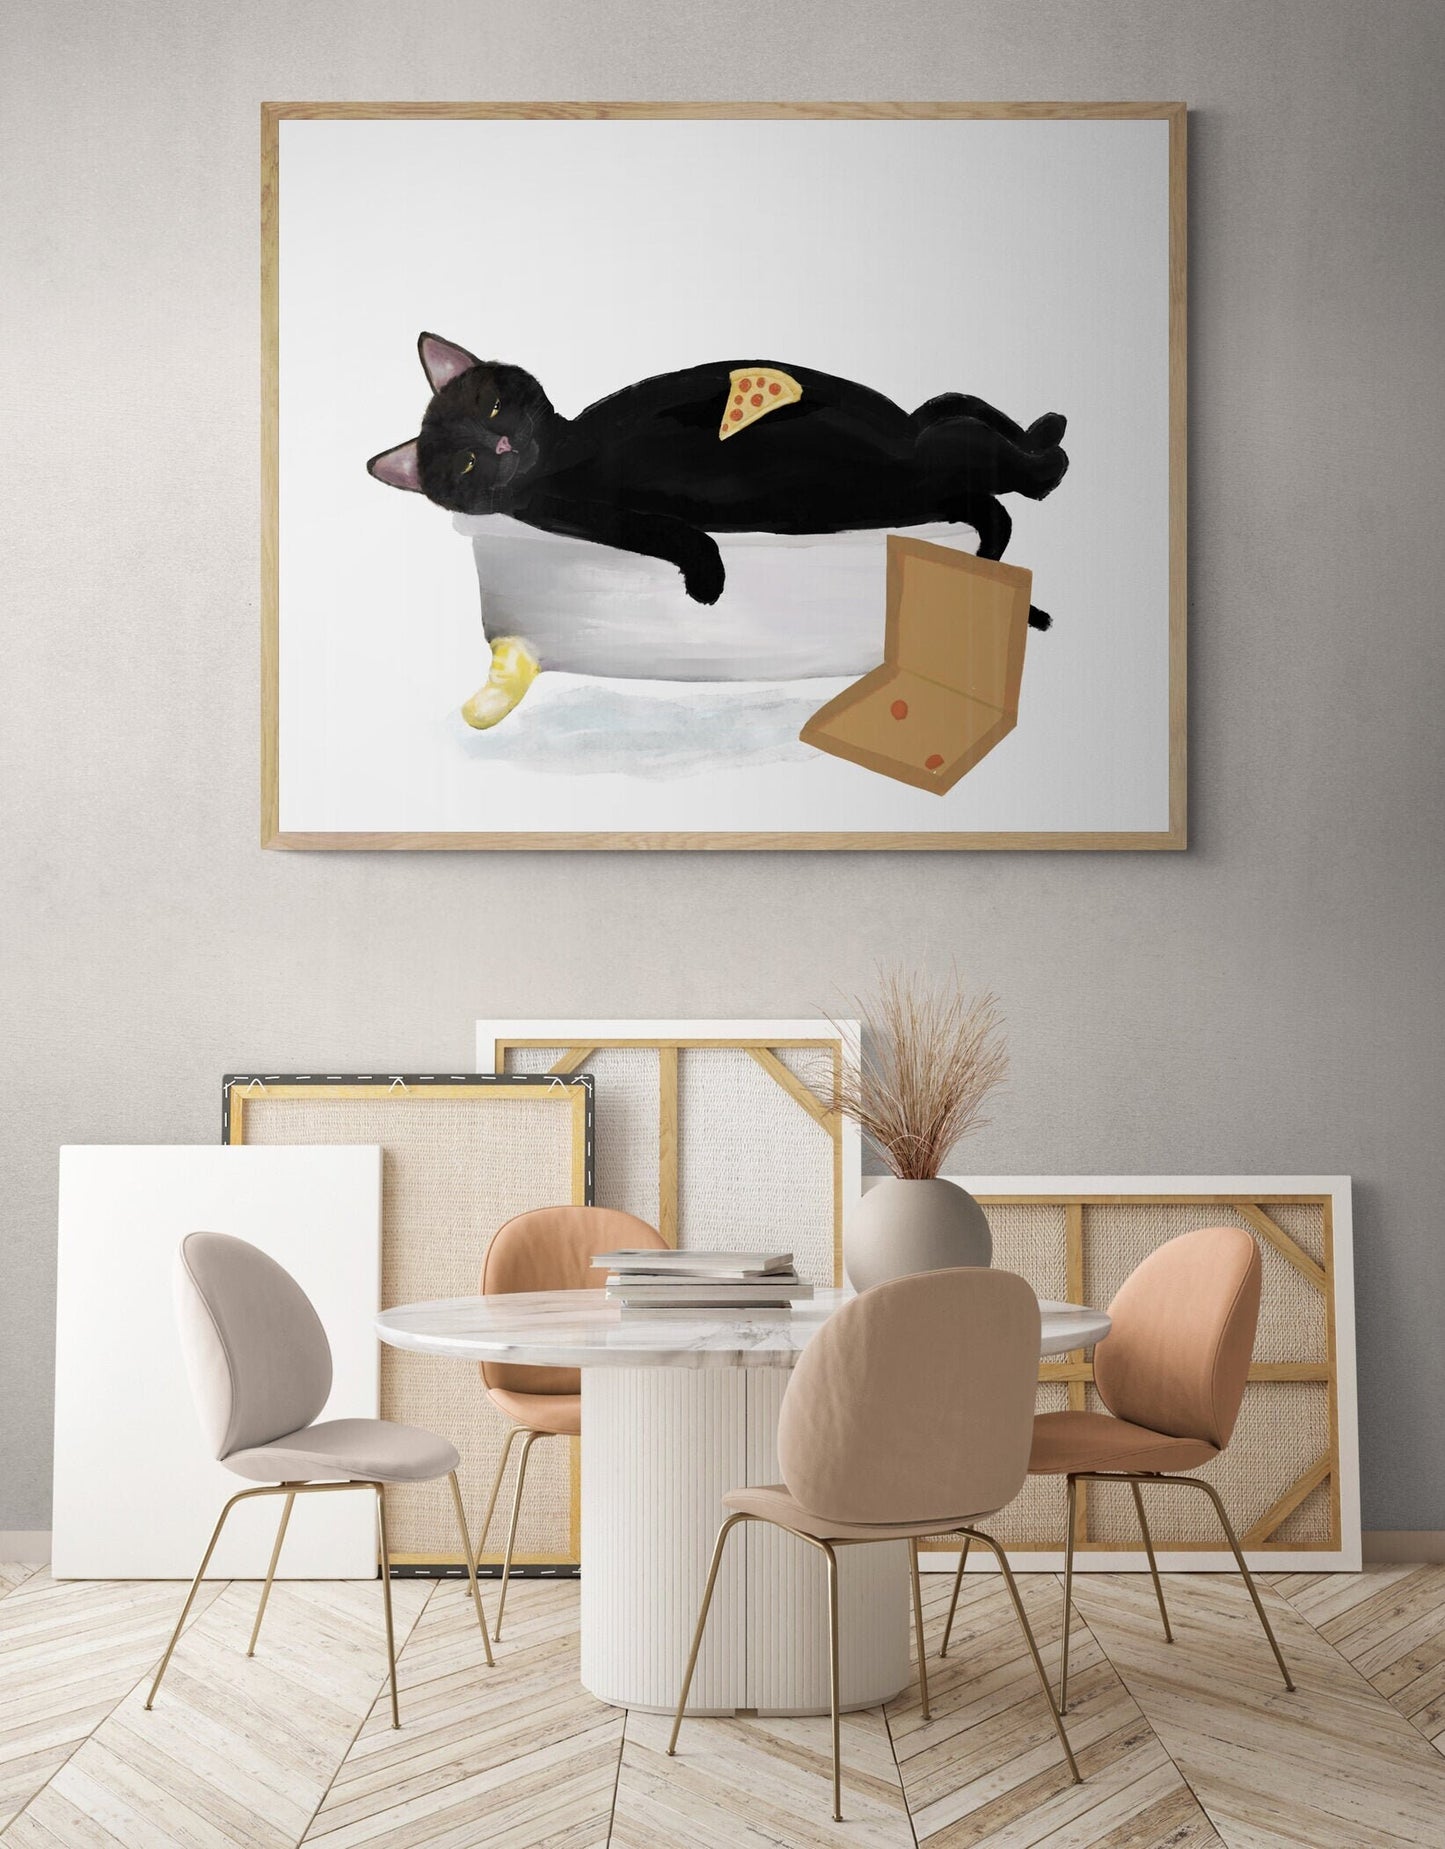 Black Cat Eating Pizza in Tub Print, Fat Black Cat In Bathtub, Bathroom Art, Bathroom Cat Painting, Kitty Relaxing In Bath Print, Cat Lover